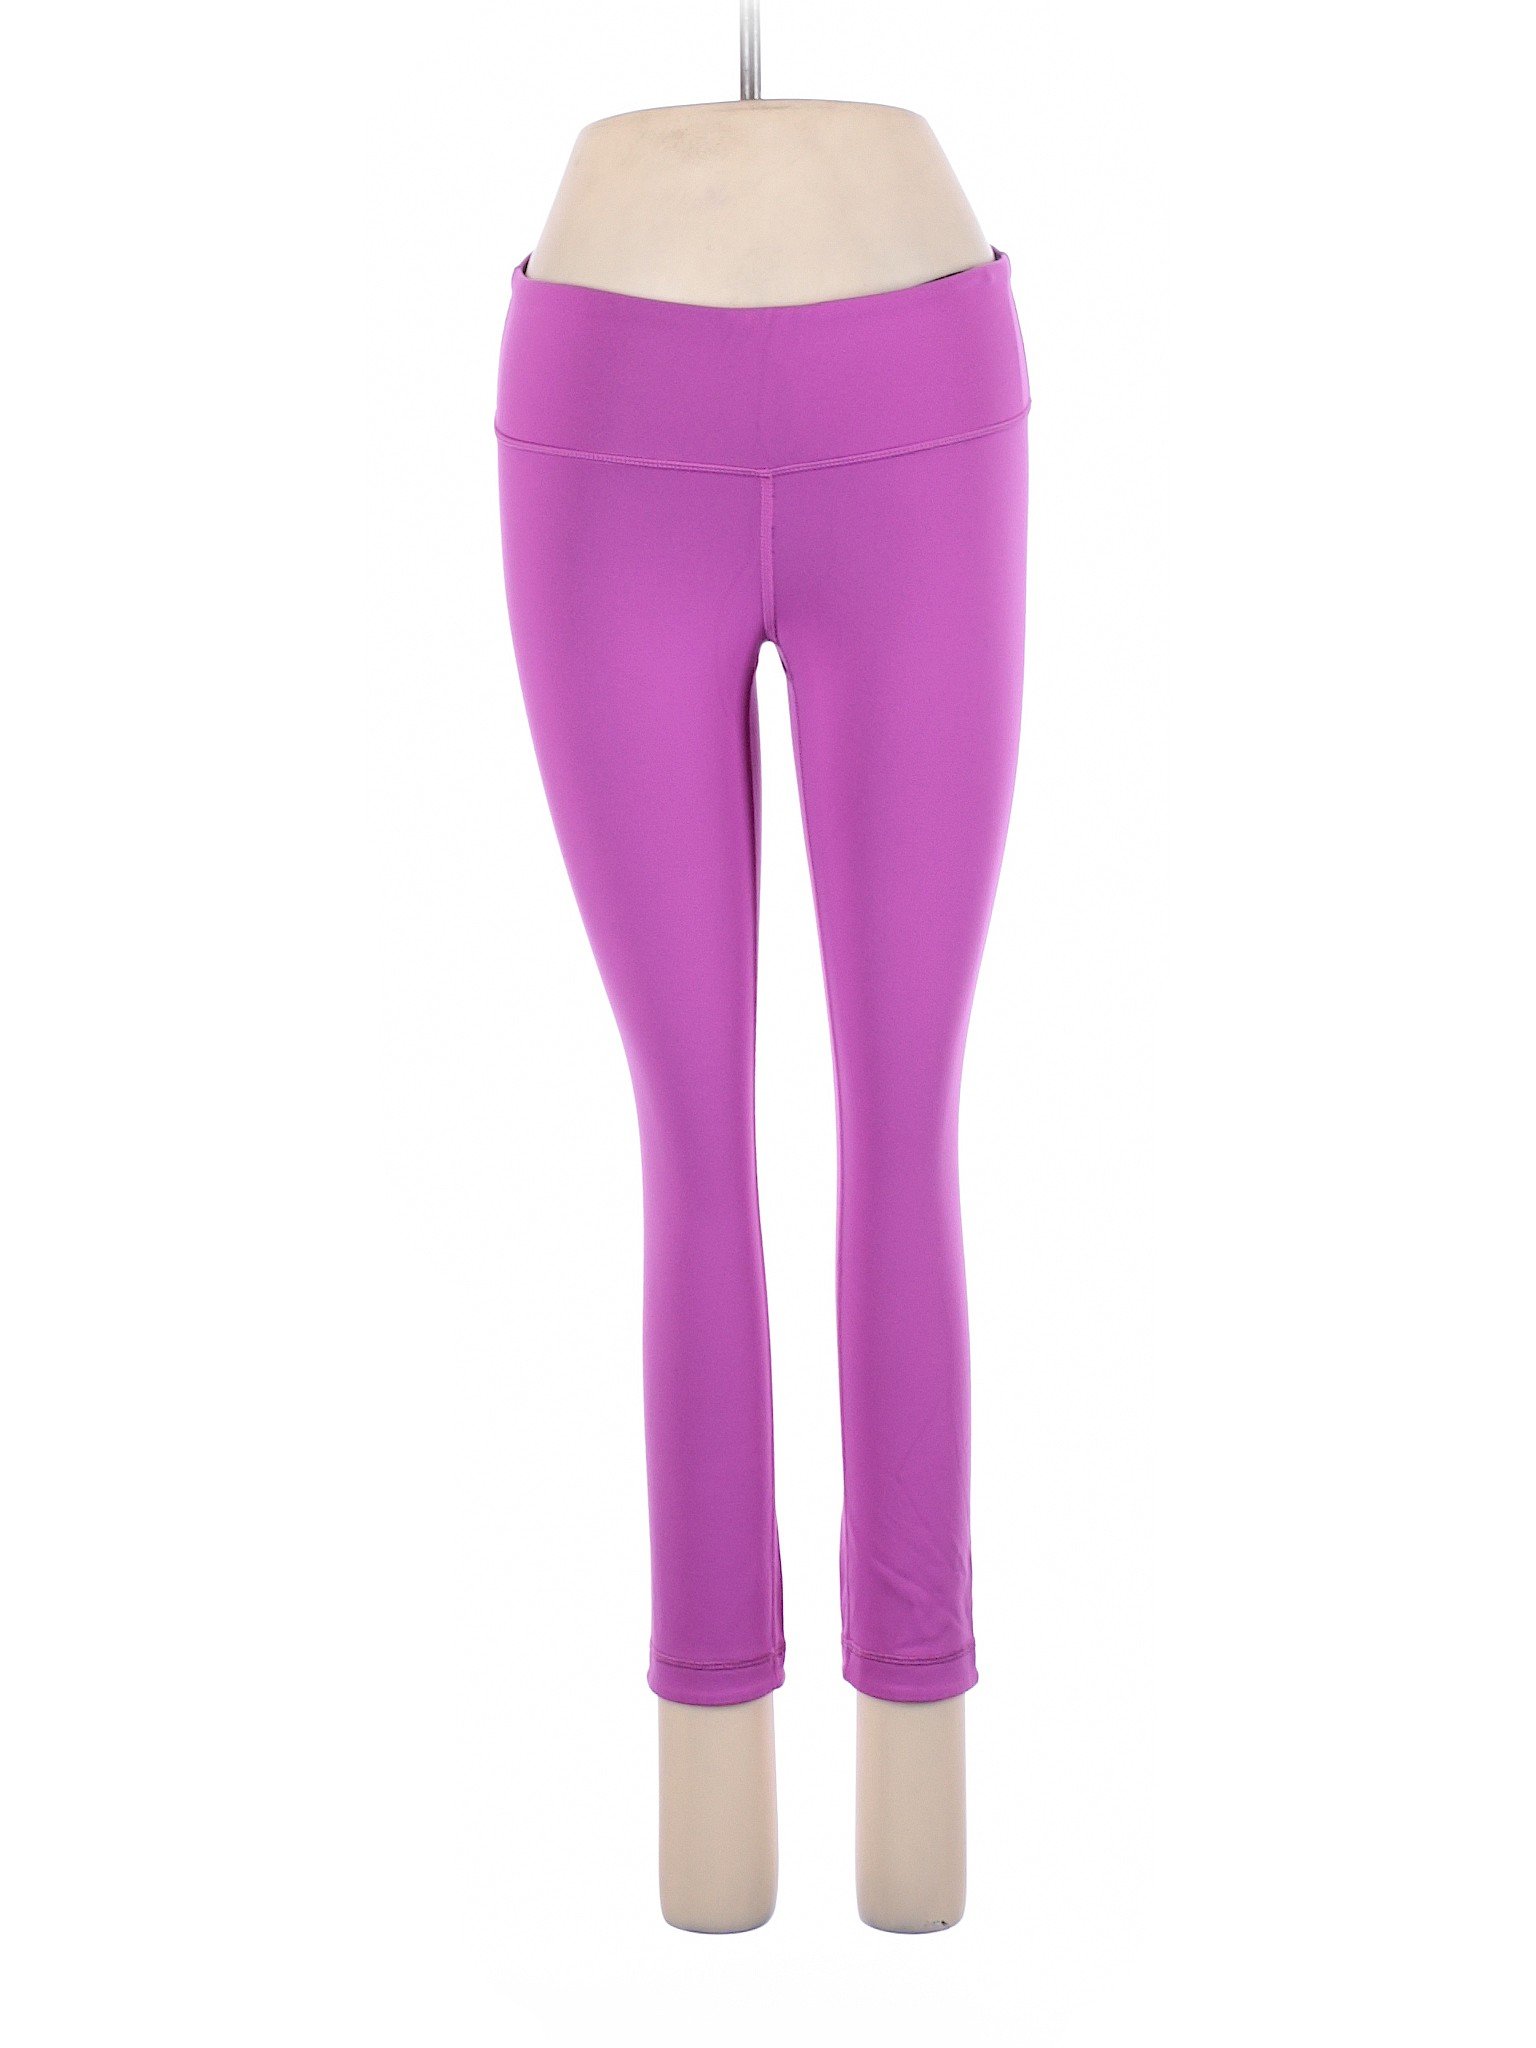 Lululemon Athletica Solid Purple Active Pants Size 4 - 52% off | thredUP